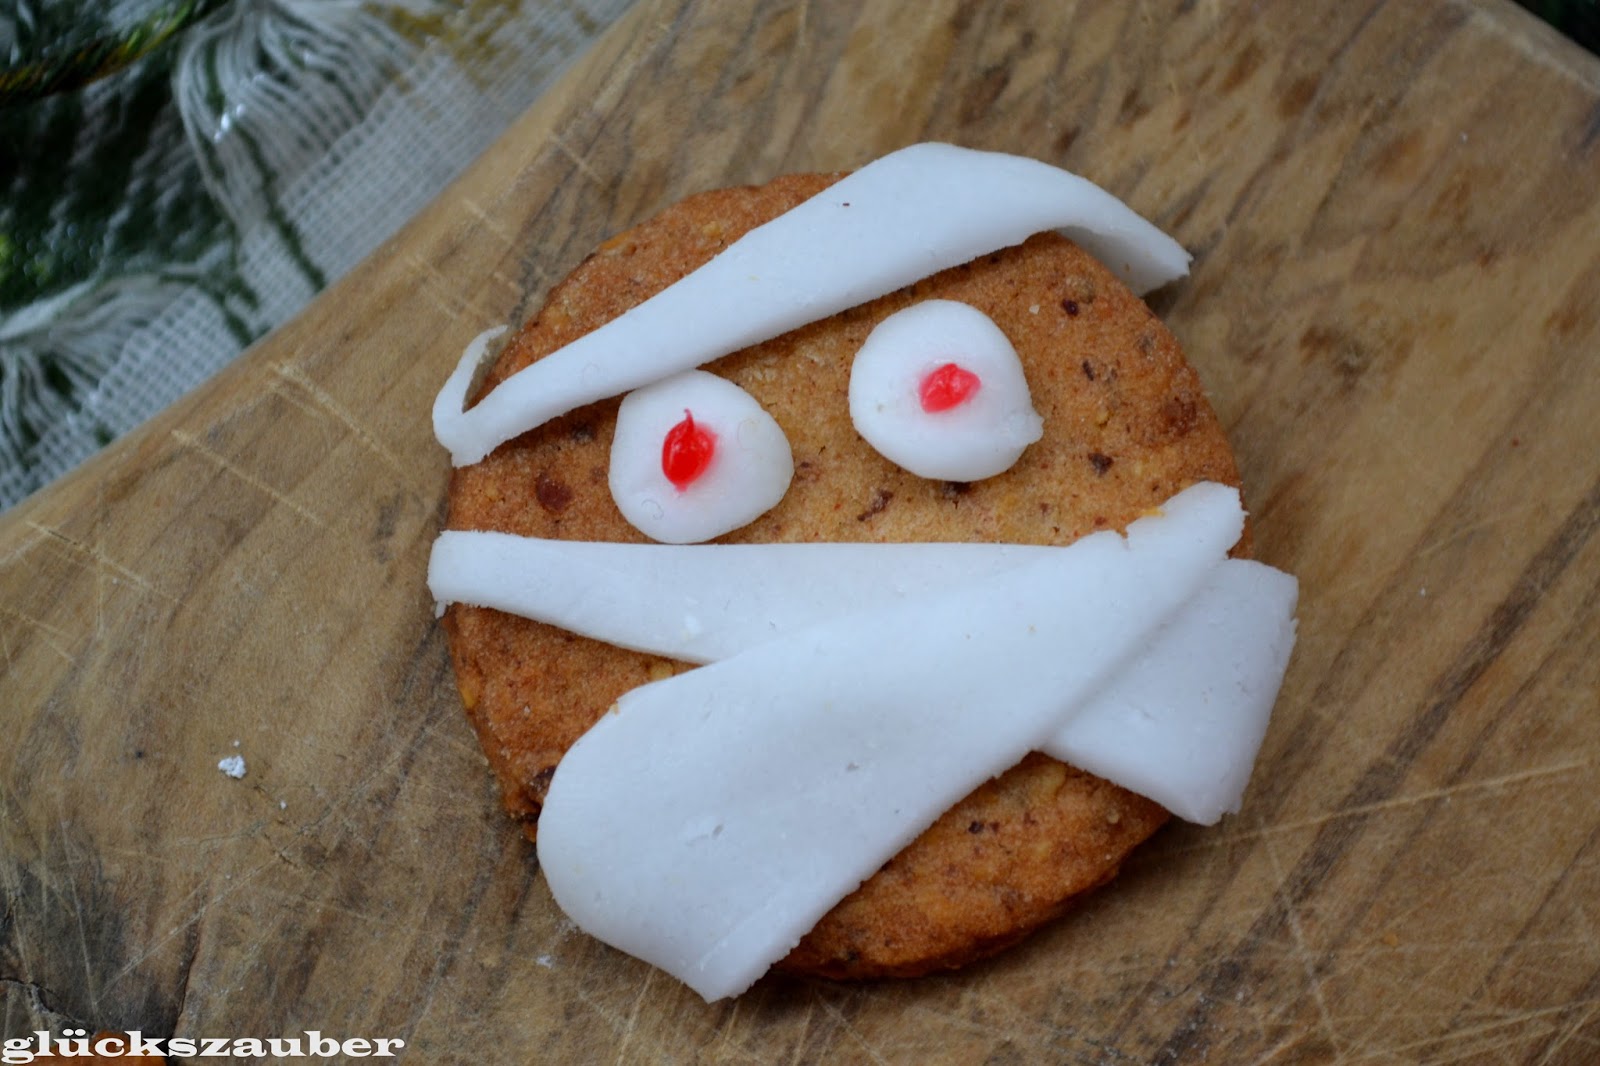 glückszauber : Halloween: Finger-Kekse, Mumien-Kekse und Cakepops im ...